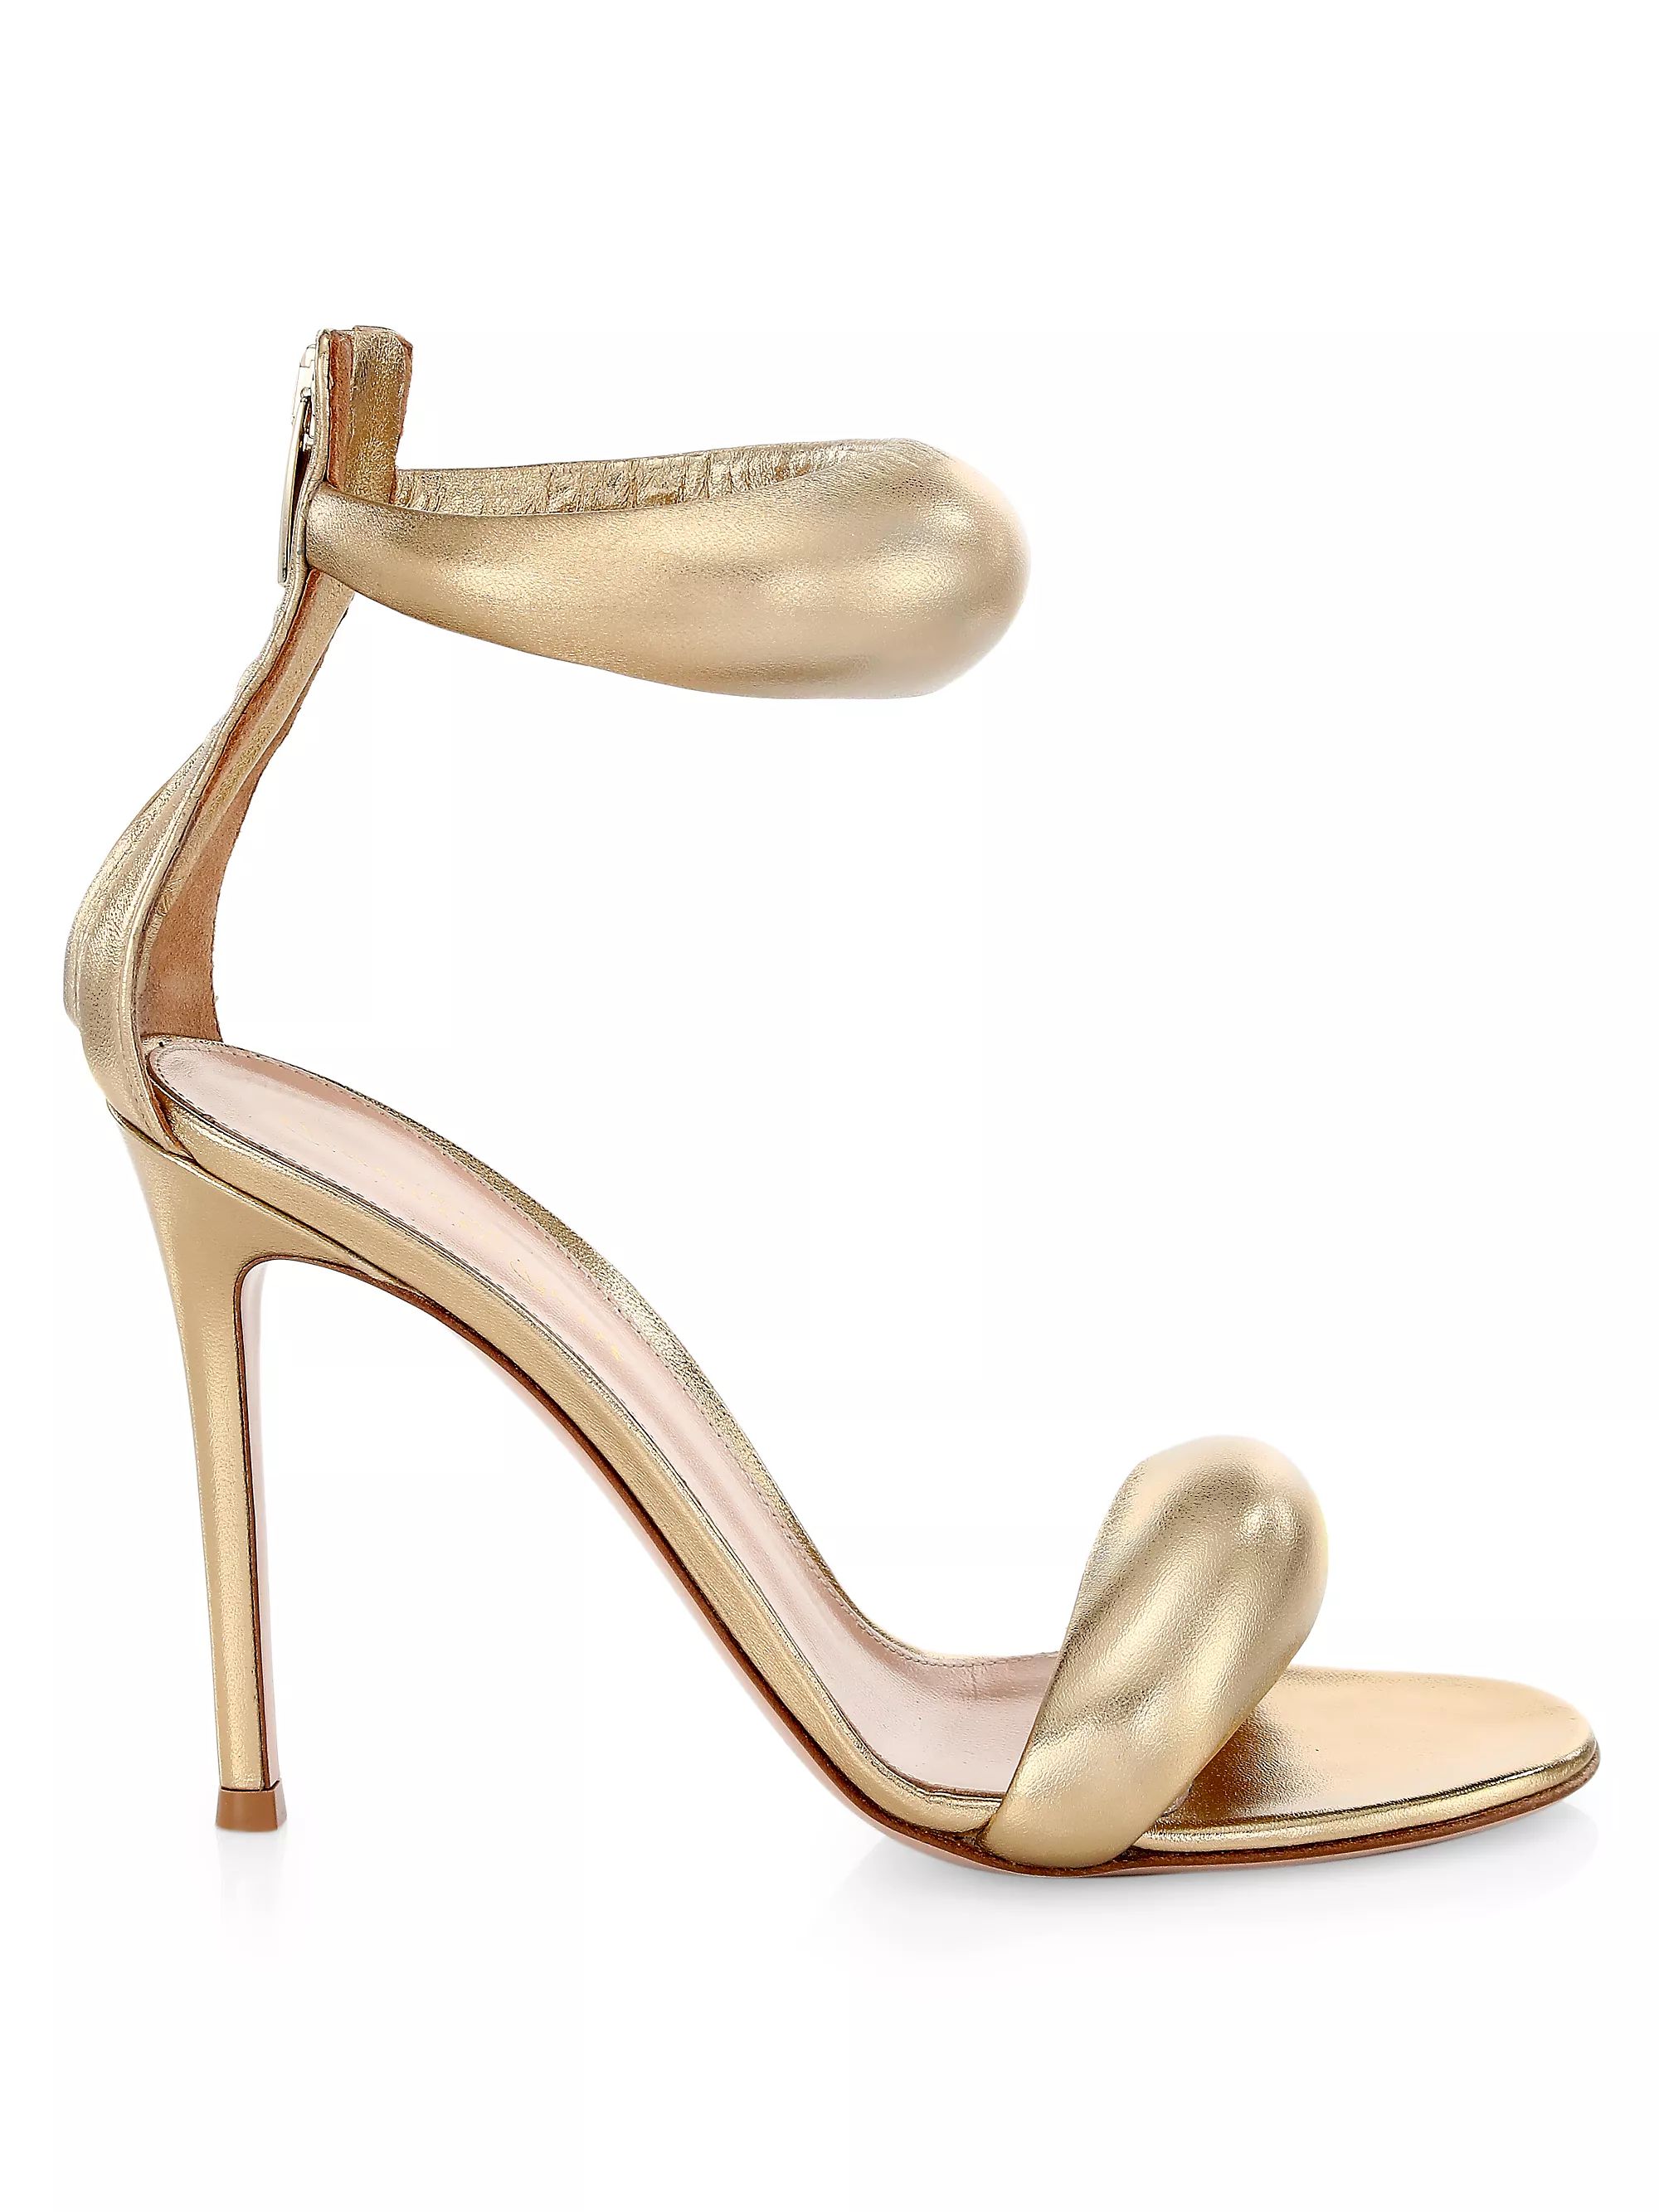 Shop Gianvito Rossi Bijoux Ankle-Strap Metallic Leather Stiletto Sandals | Saks Fifth Avenue | Saks Fifth Avenue